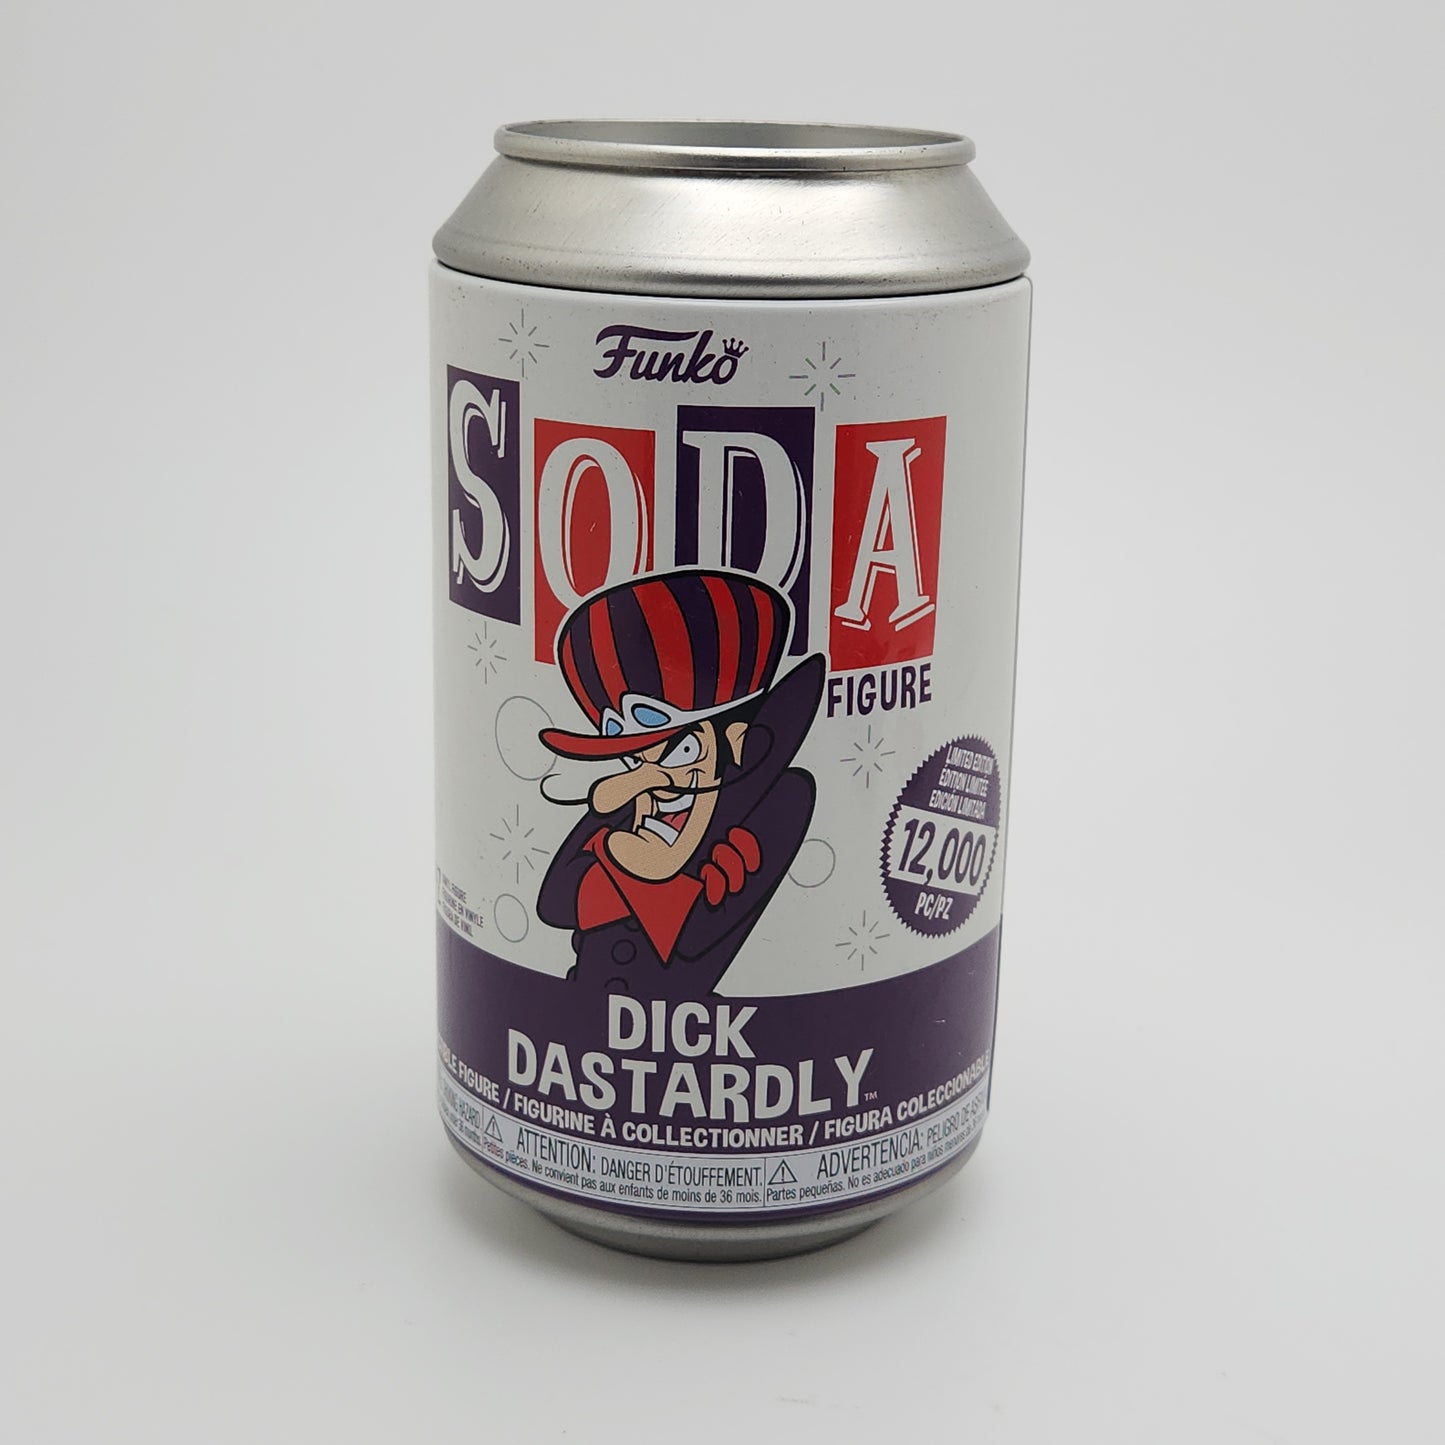 Funko Soda- Dick Dastardly